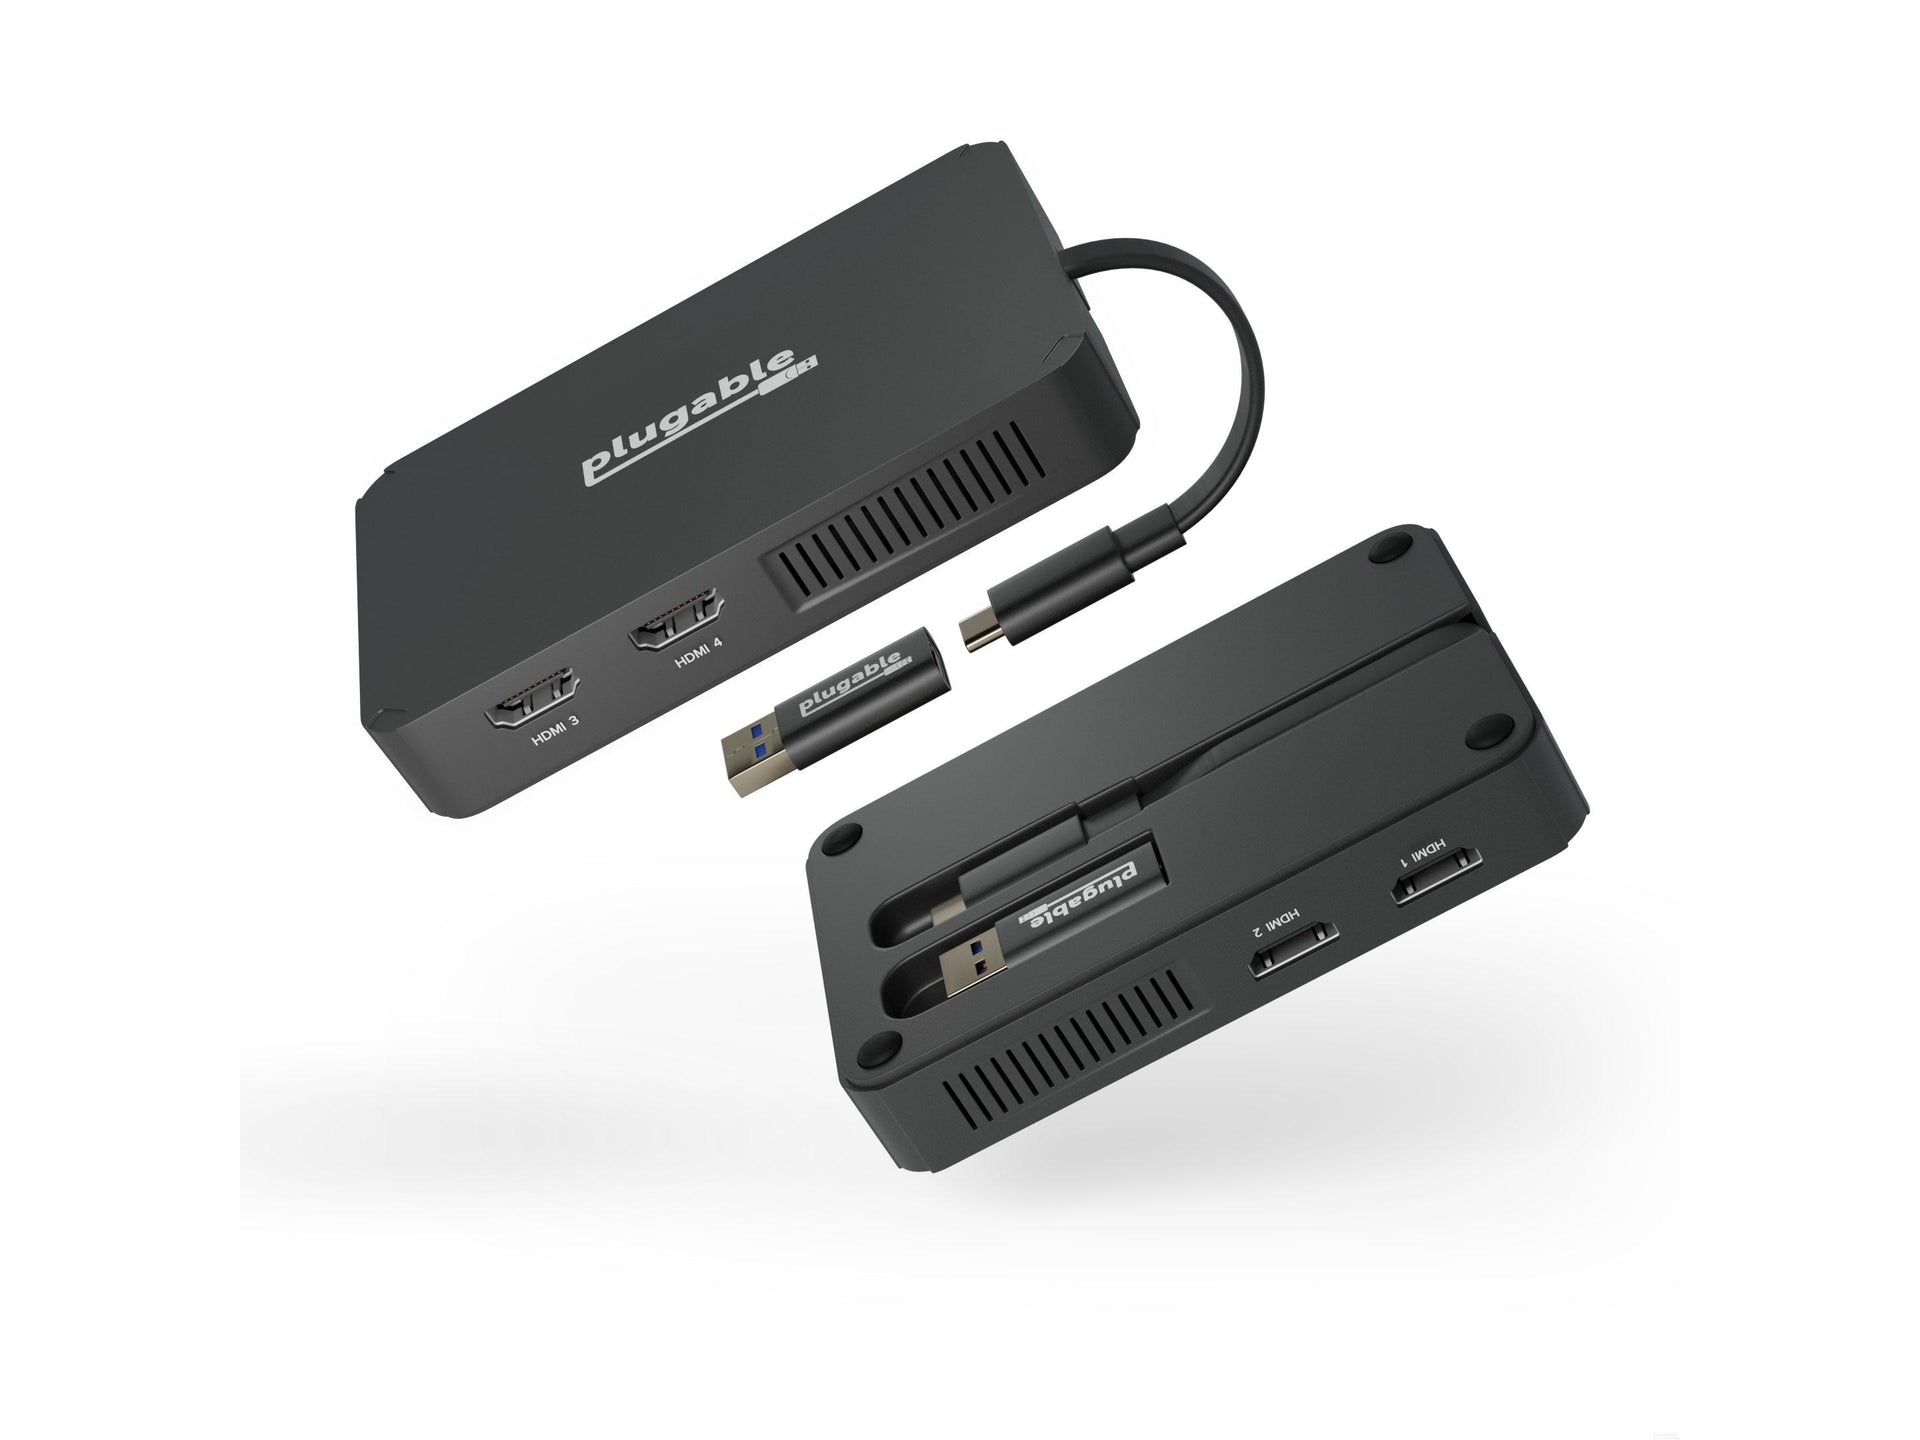 Plugable USB-C or USB 3.0 Quad – Plugable